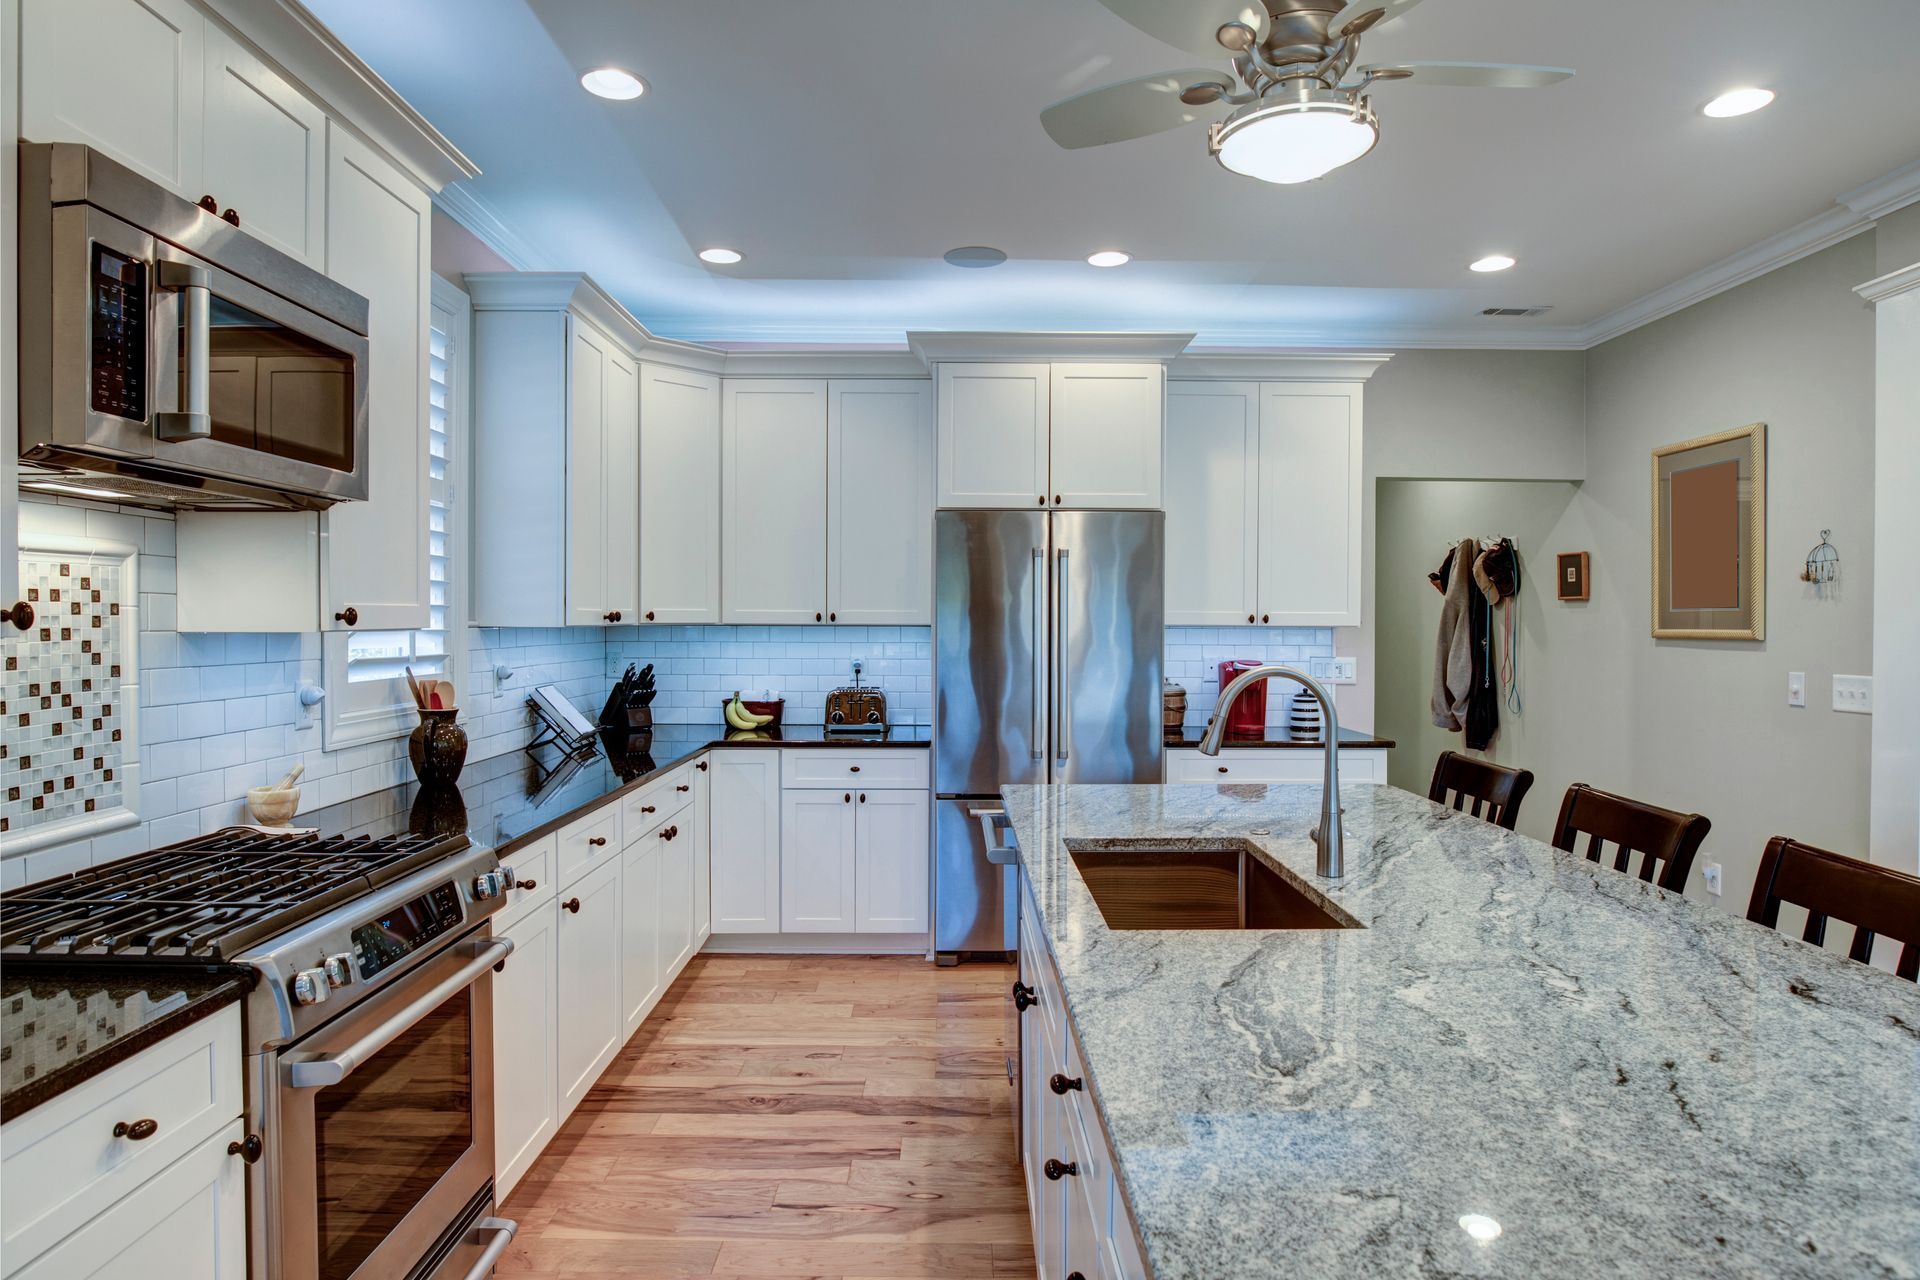 Upgrade your kitchen with stunning countertops in  quartz, granite, or butcher block